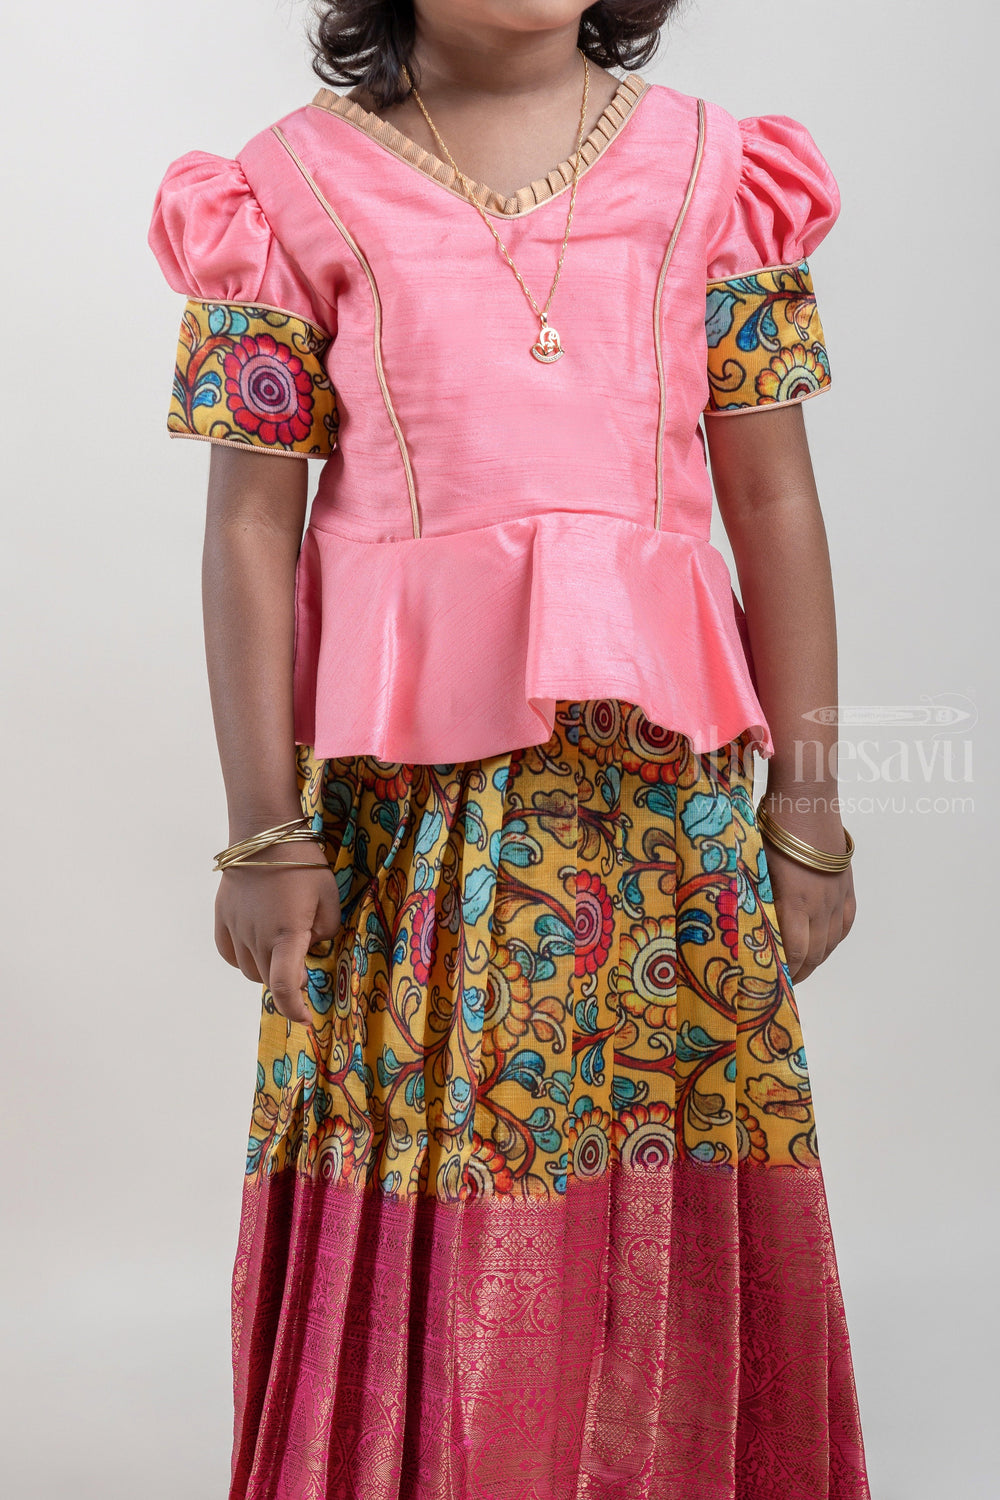 The Nesavu Pattu Pavadai Salmon Pink and Yellow Silk Pattu Pavadai for Girls with Floral Cuffs and Banarasi Border Nesavu Salmon Pink and Yellow Silk Pattu Pavadai for Girls at The Nesavu | Traditional Indian Outfit